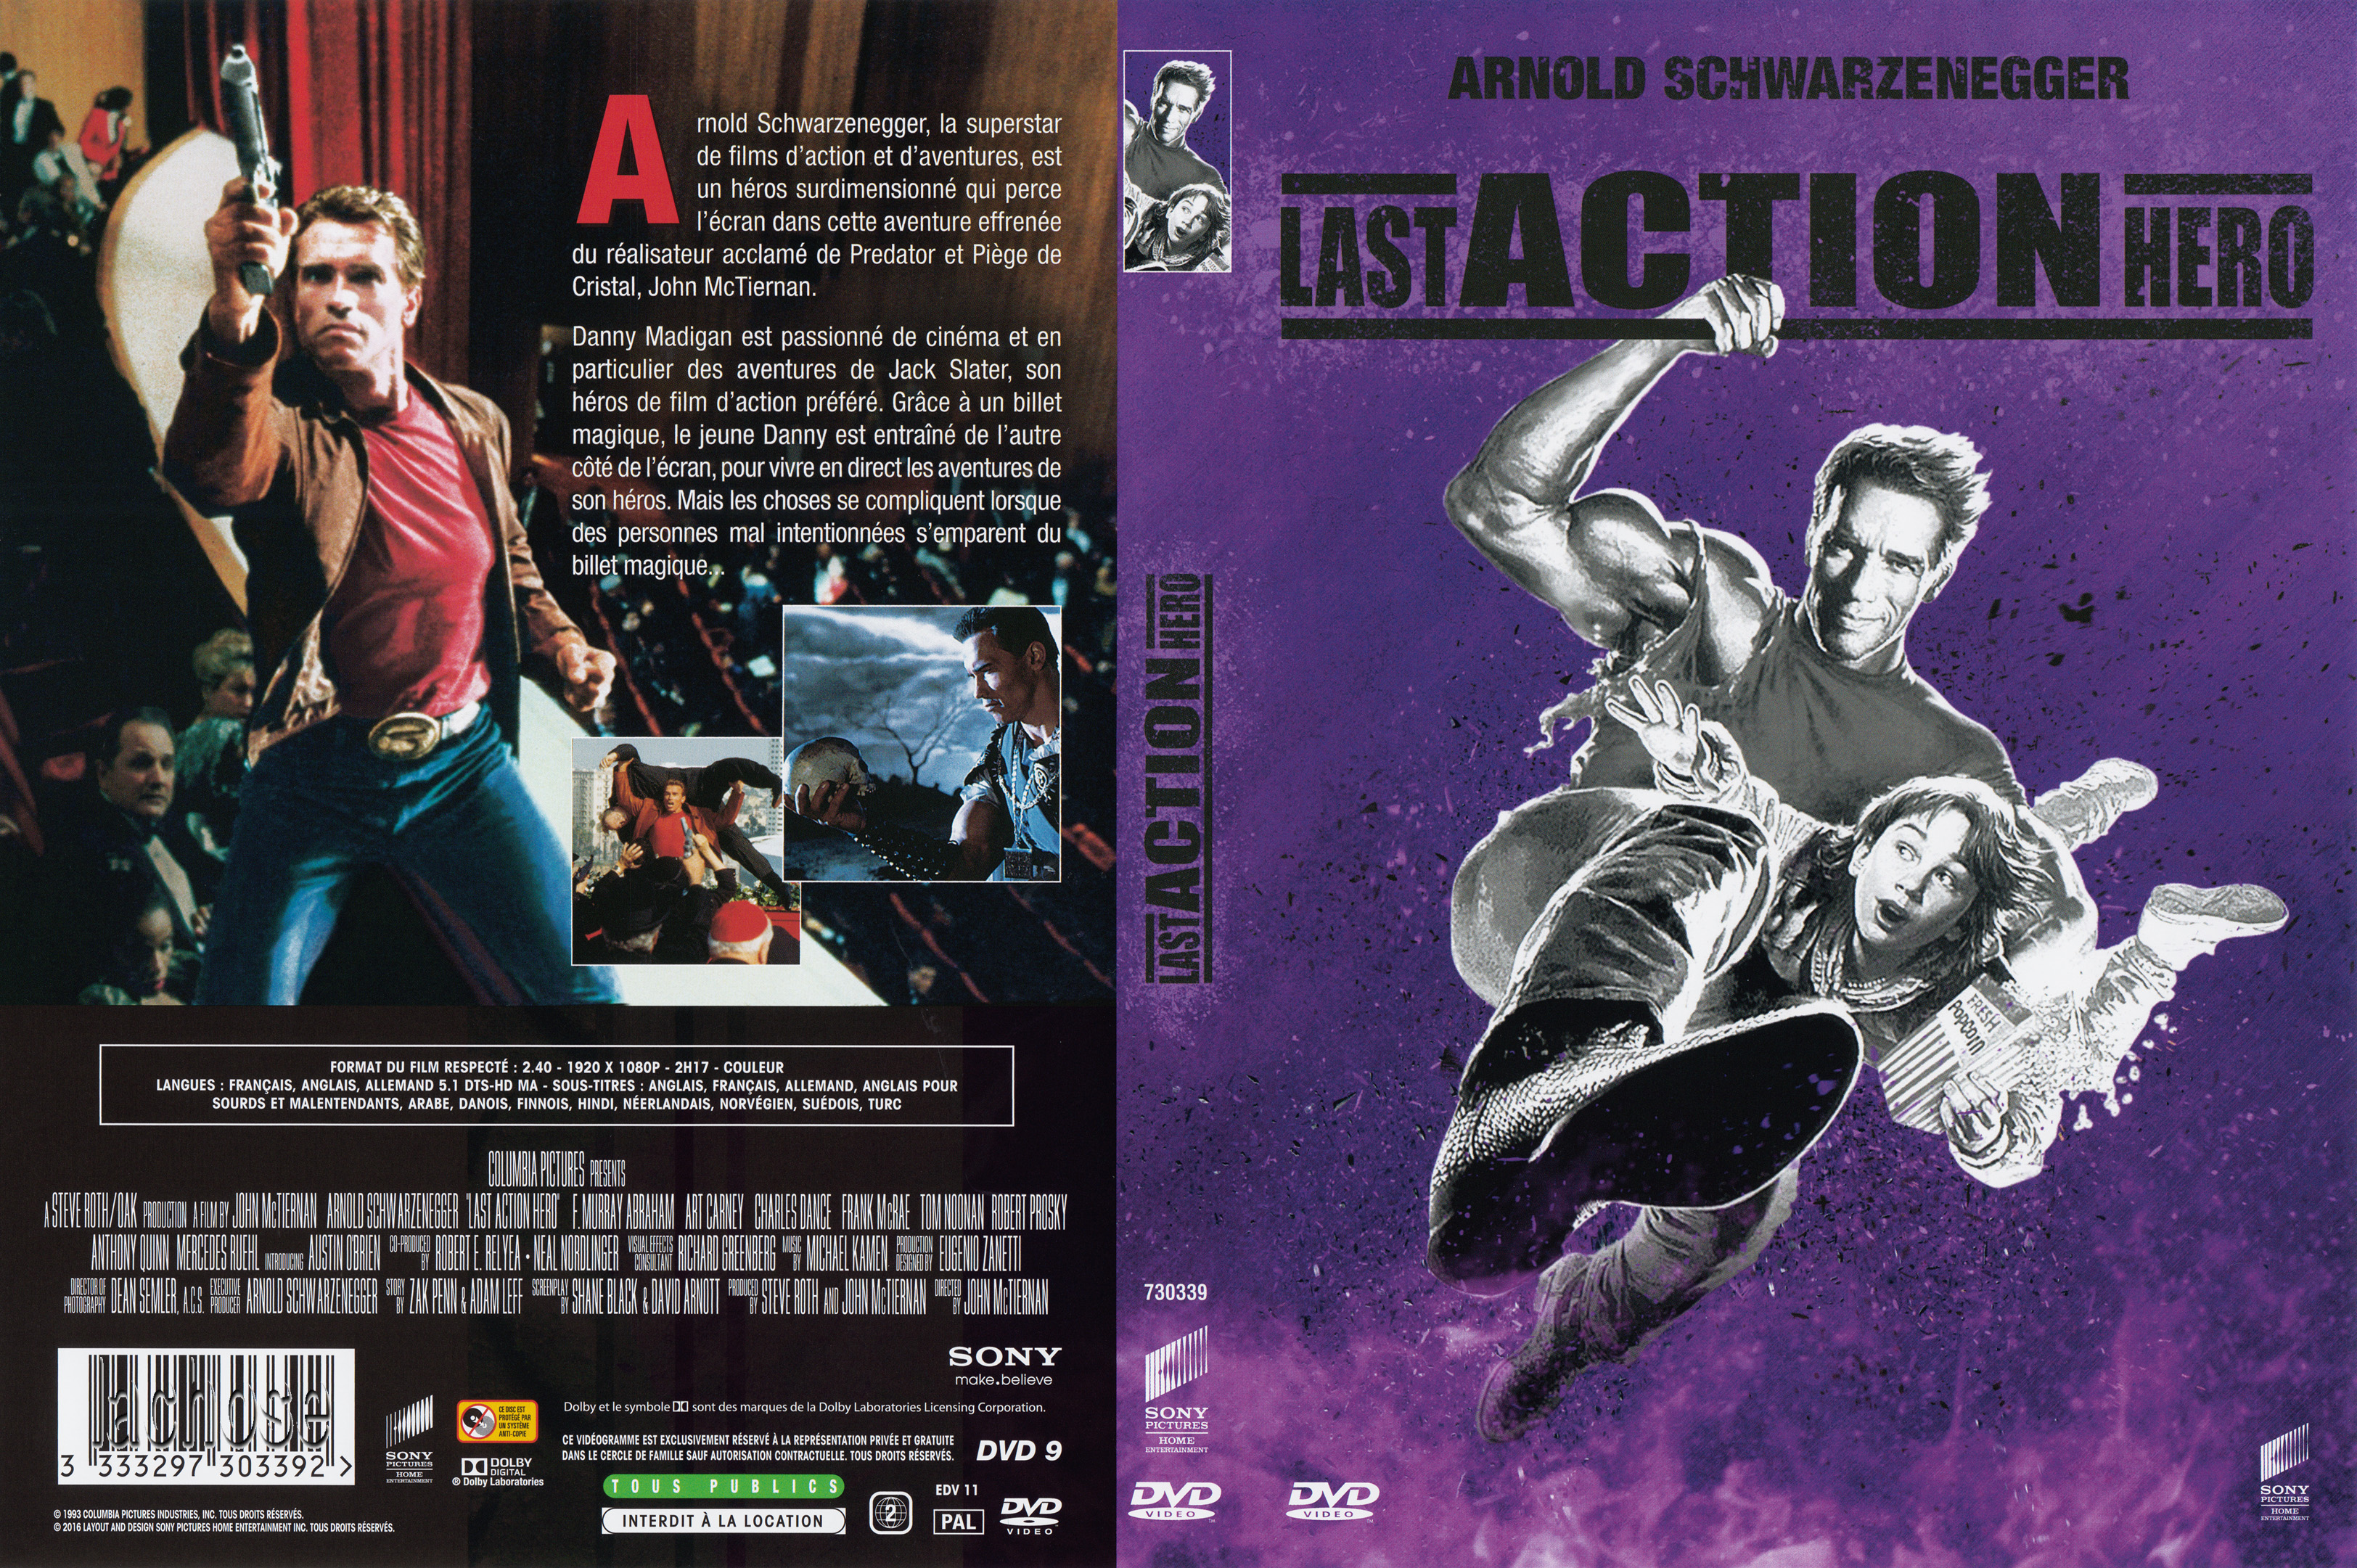 Jaquette DVD Last action hero v4